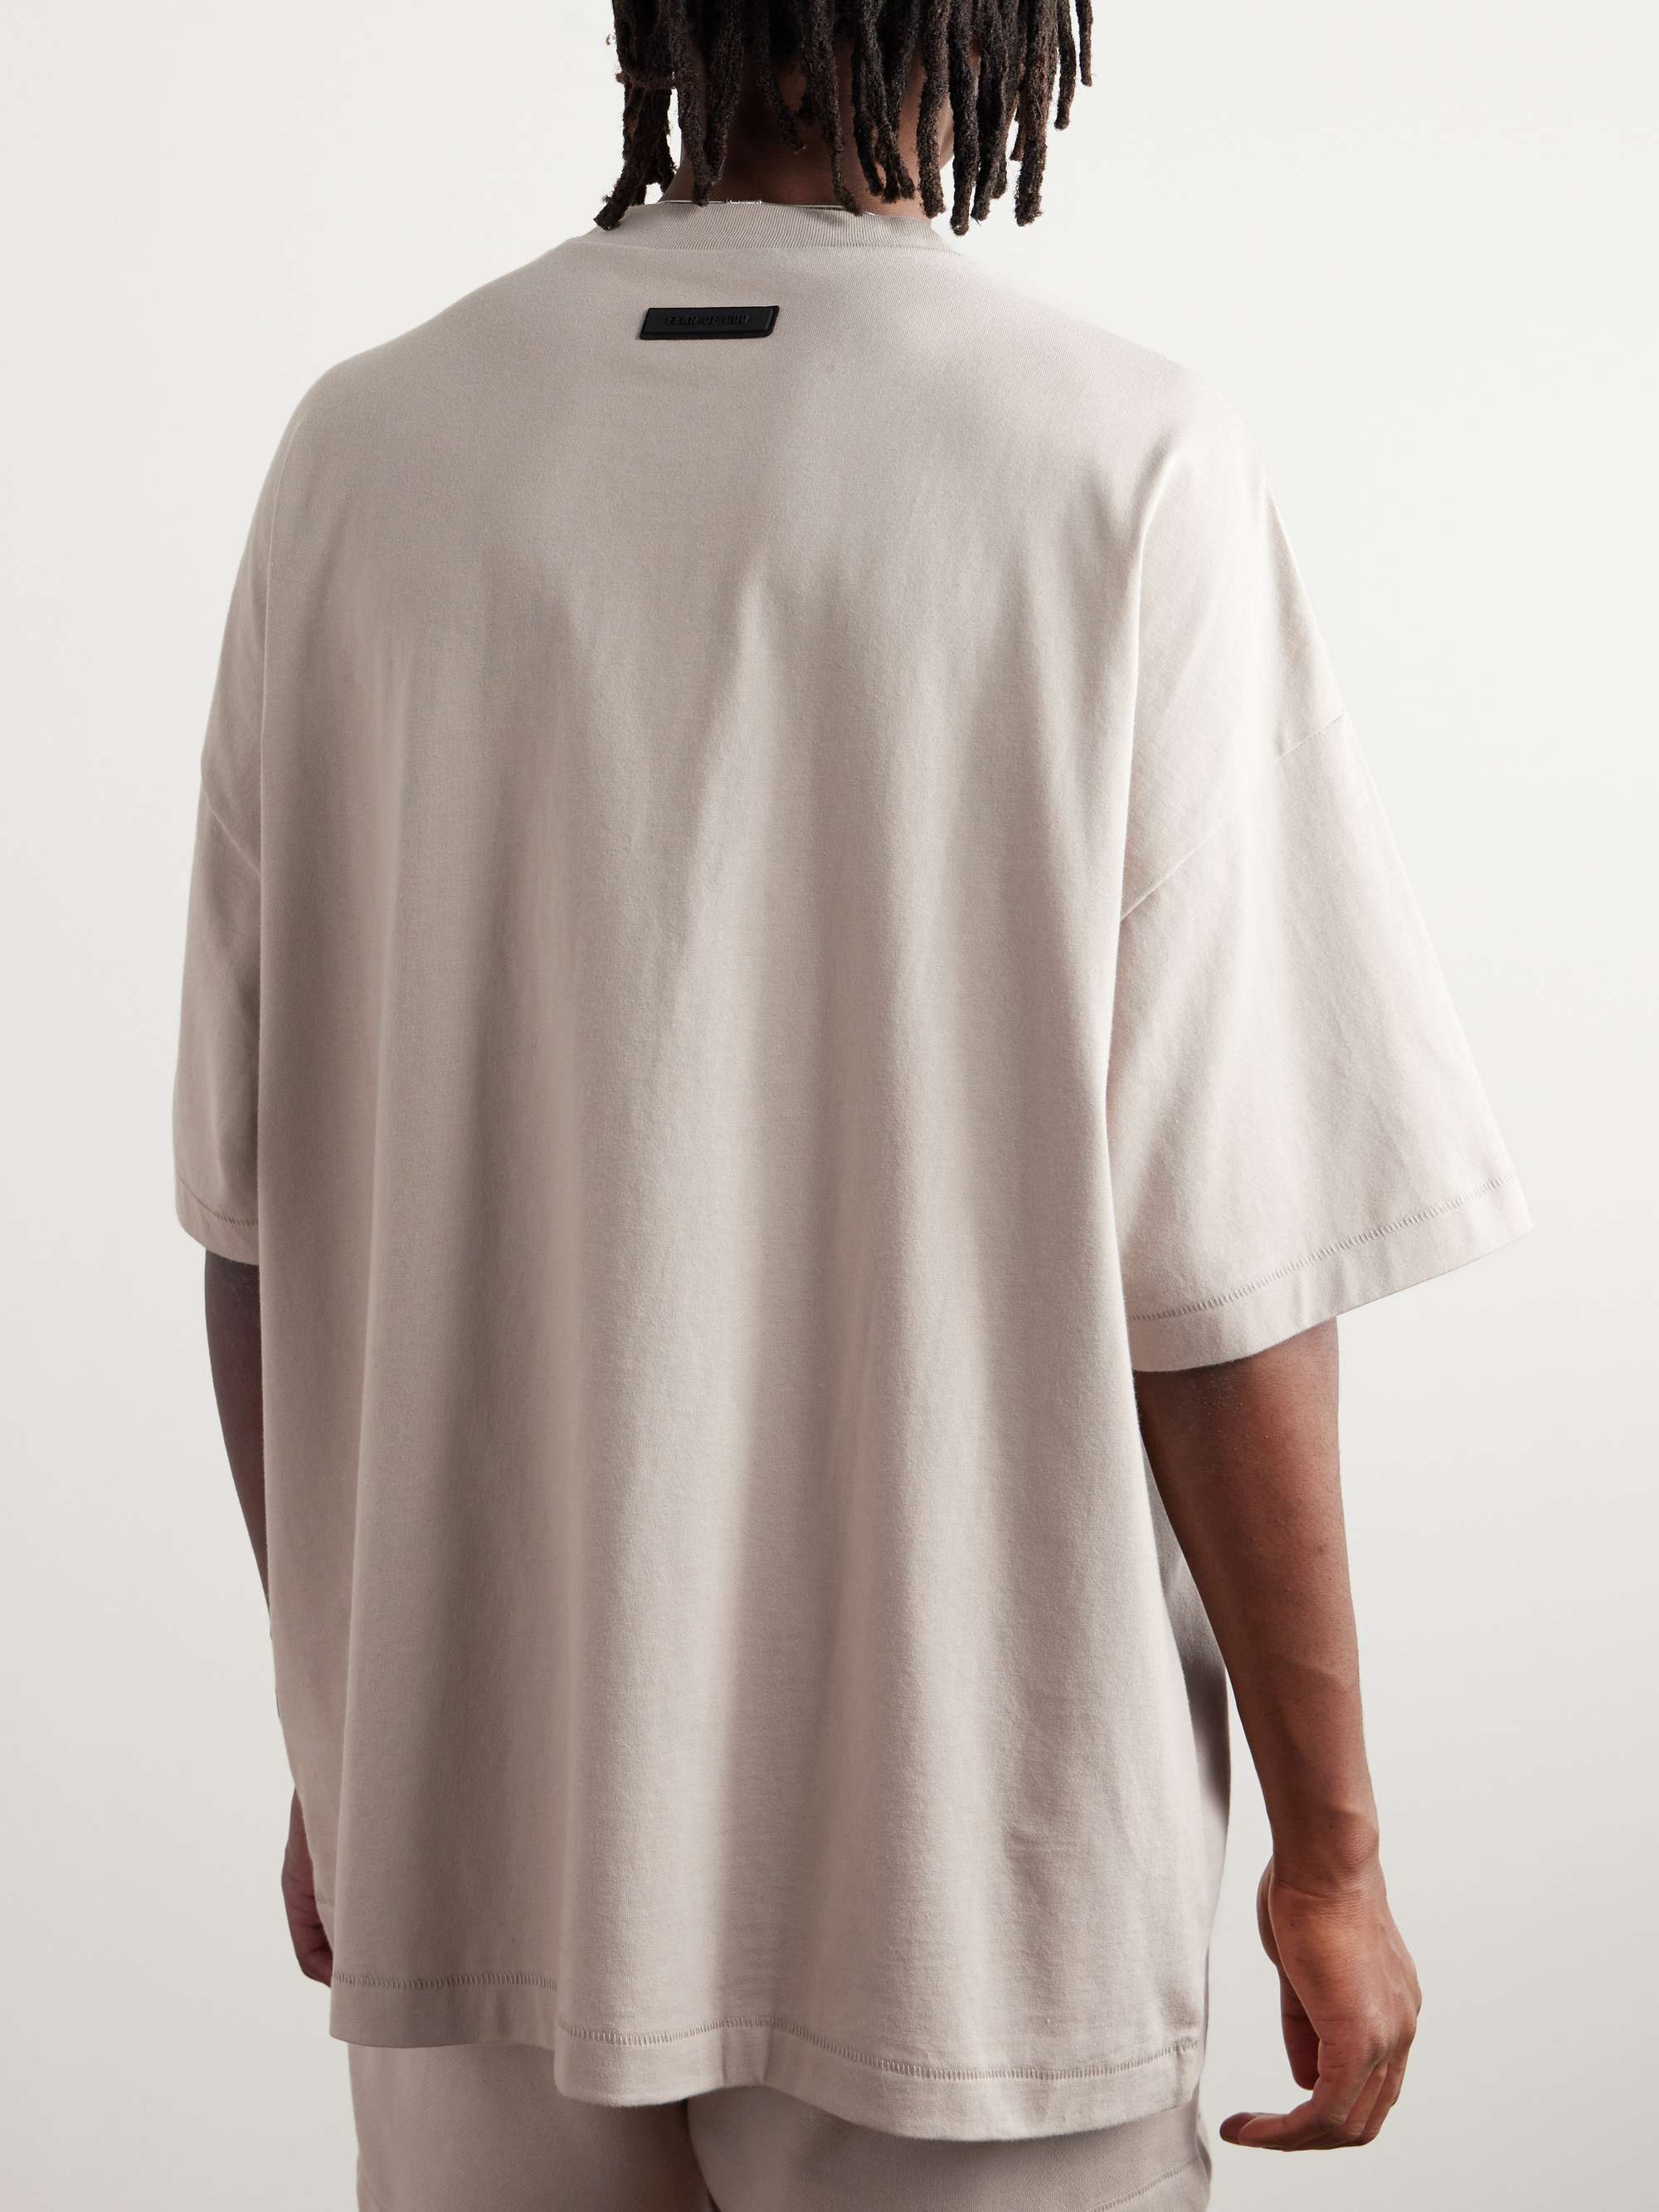 FEAR OF GOD ESSENTIALS Logo-Appliquéd Cotton-Jersey T-Shirt for Men ...